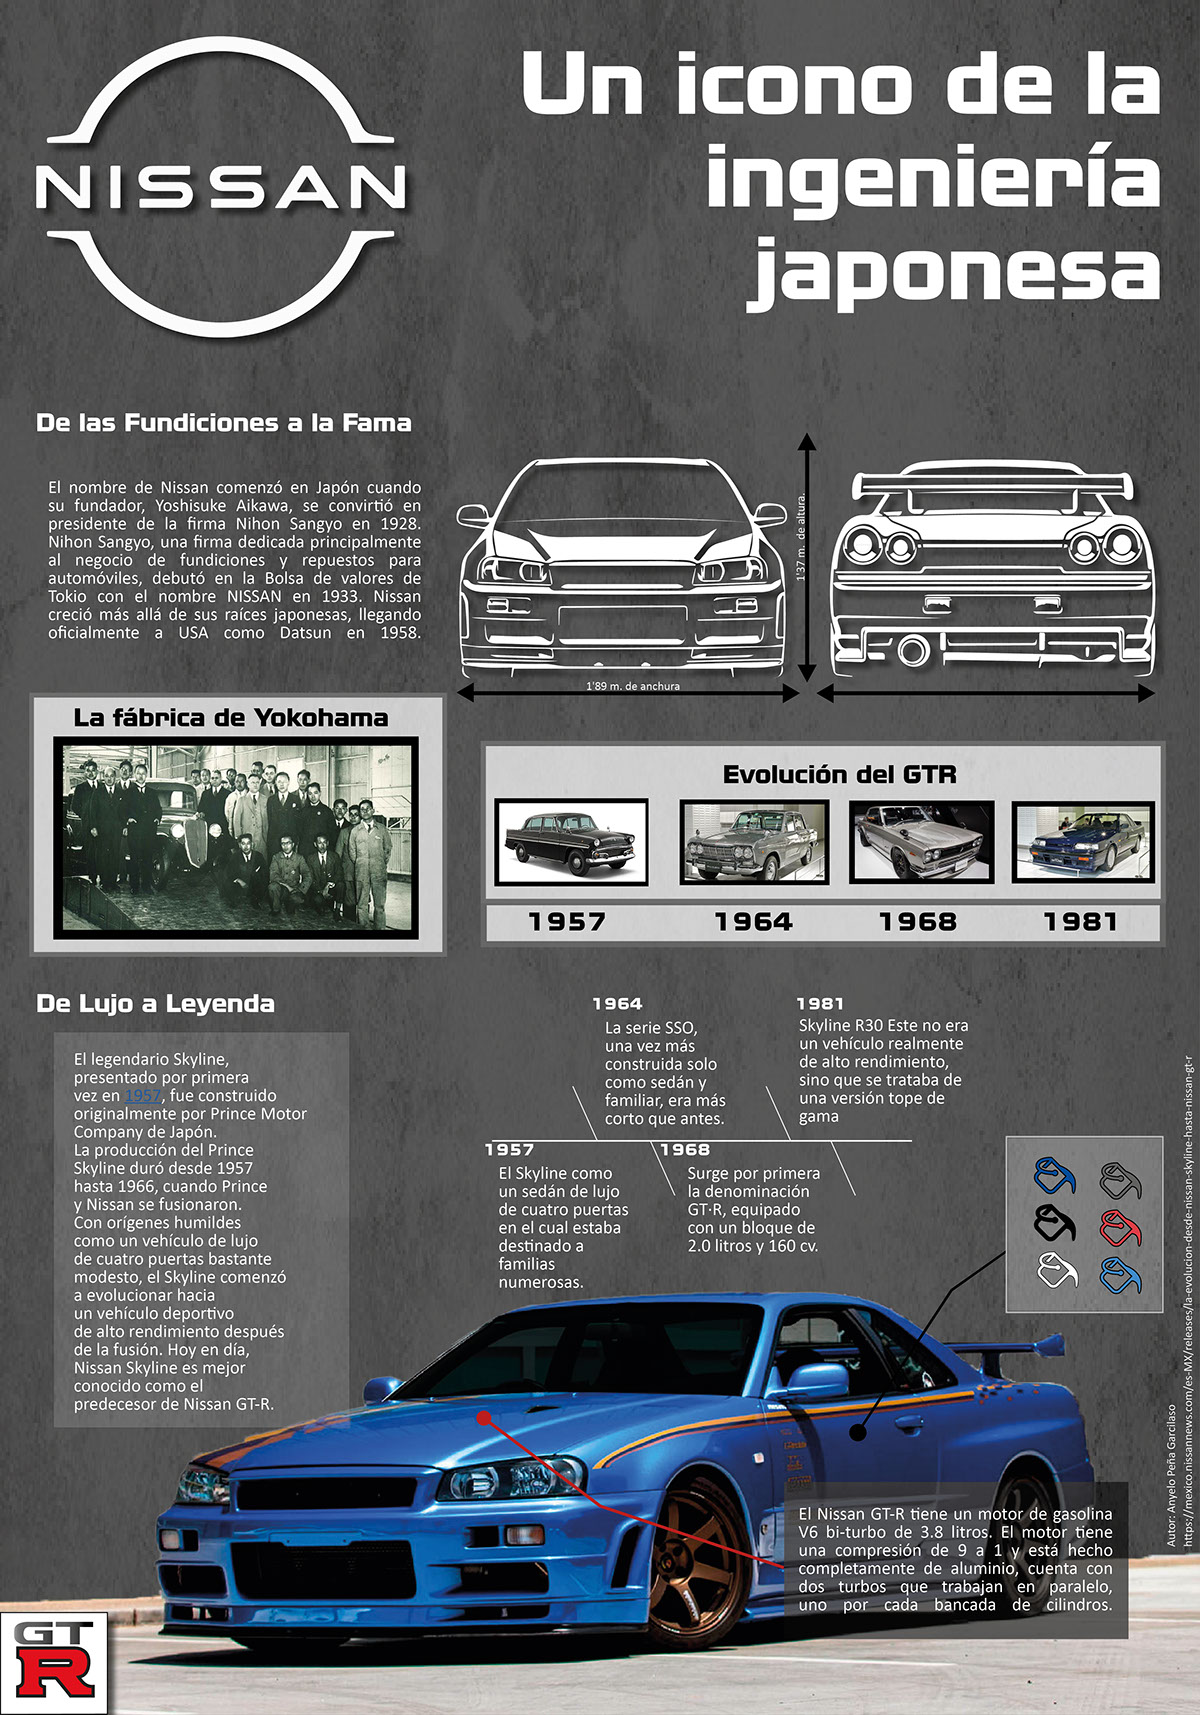 Infografia Nissan rendition image